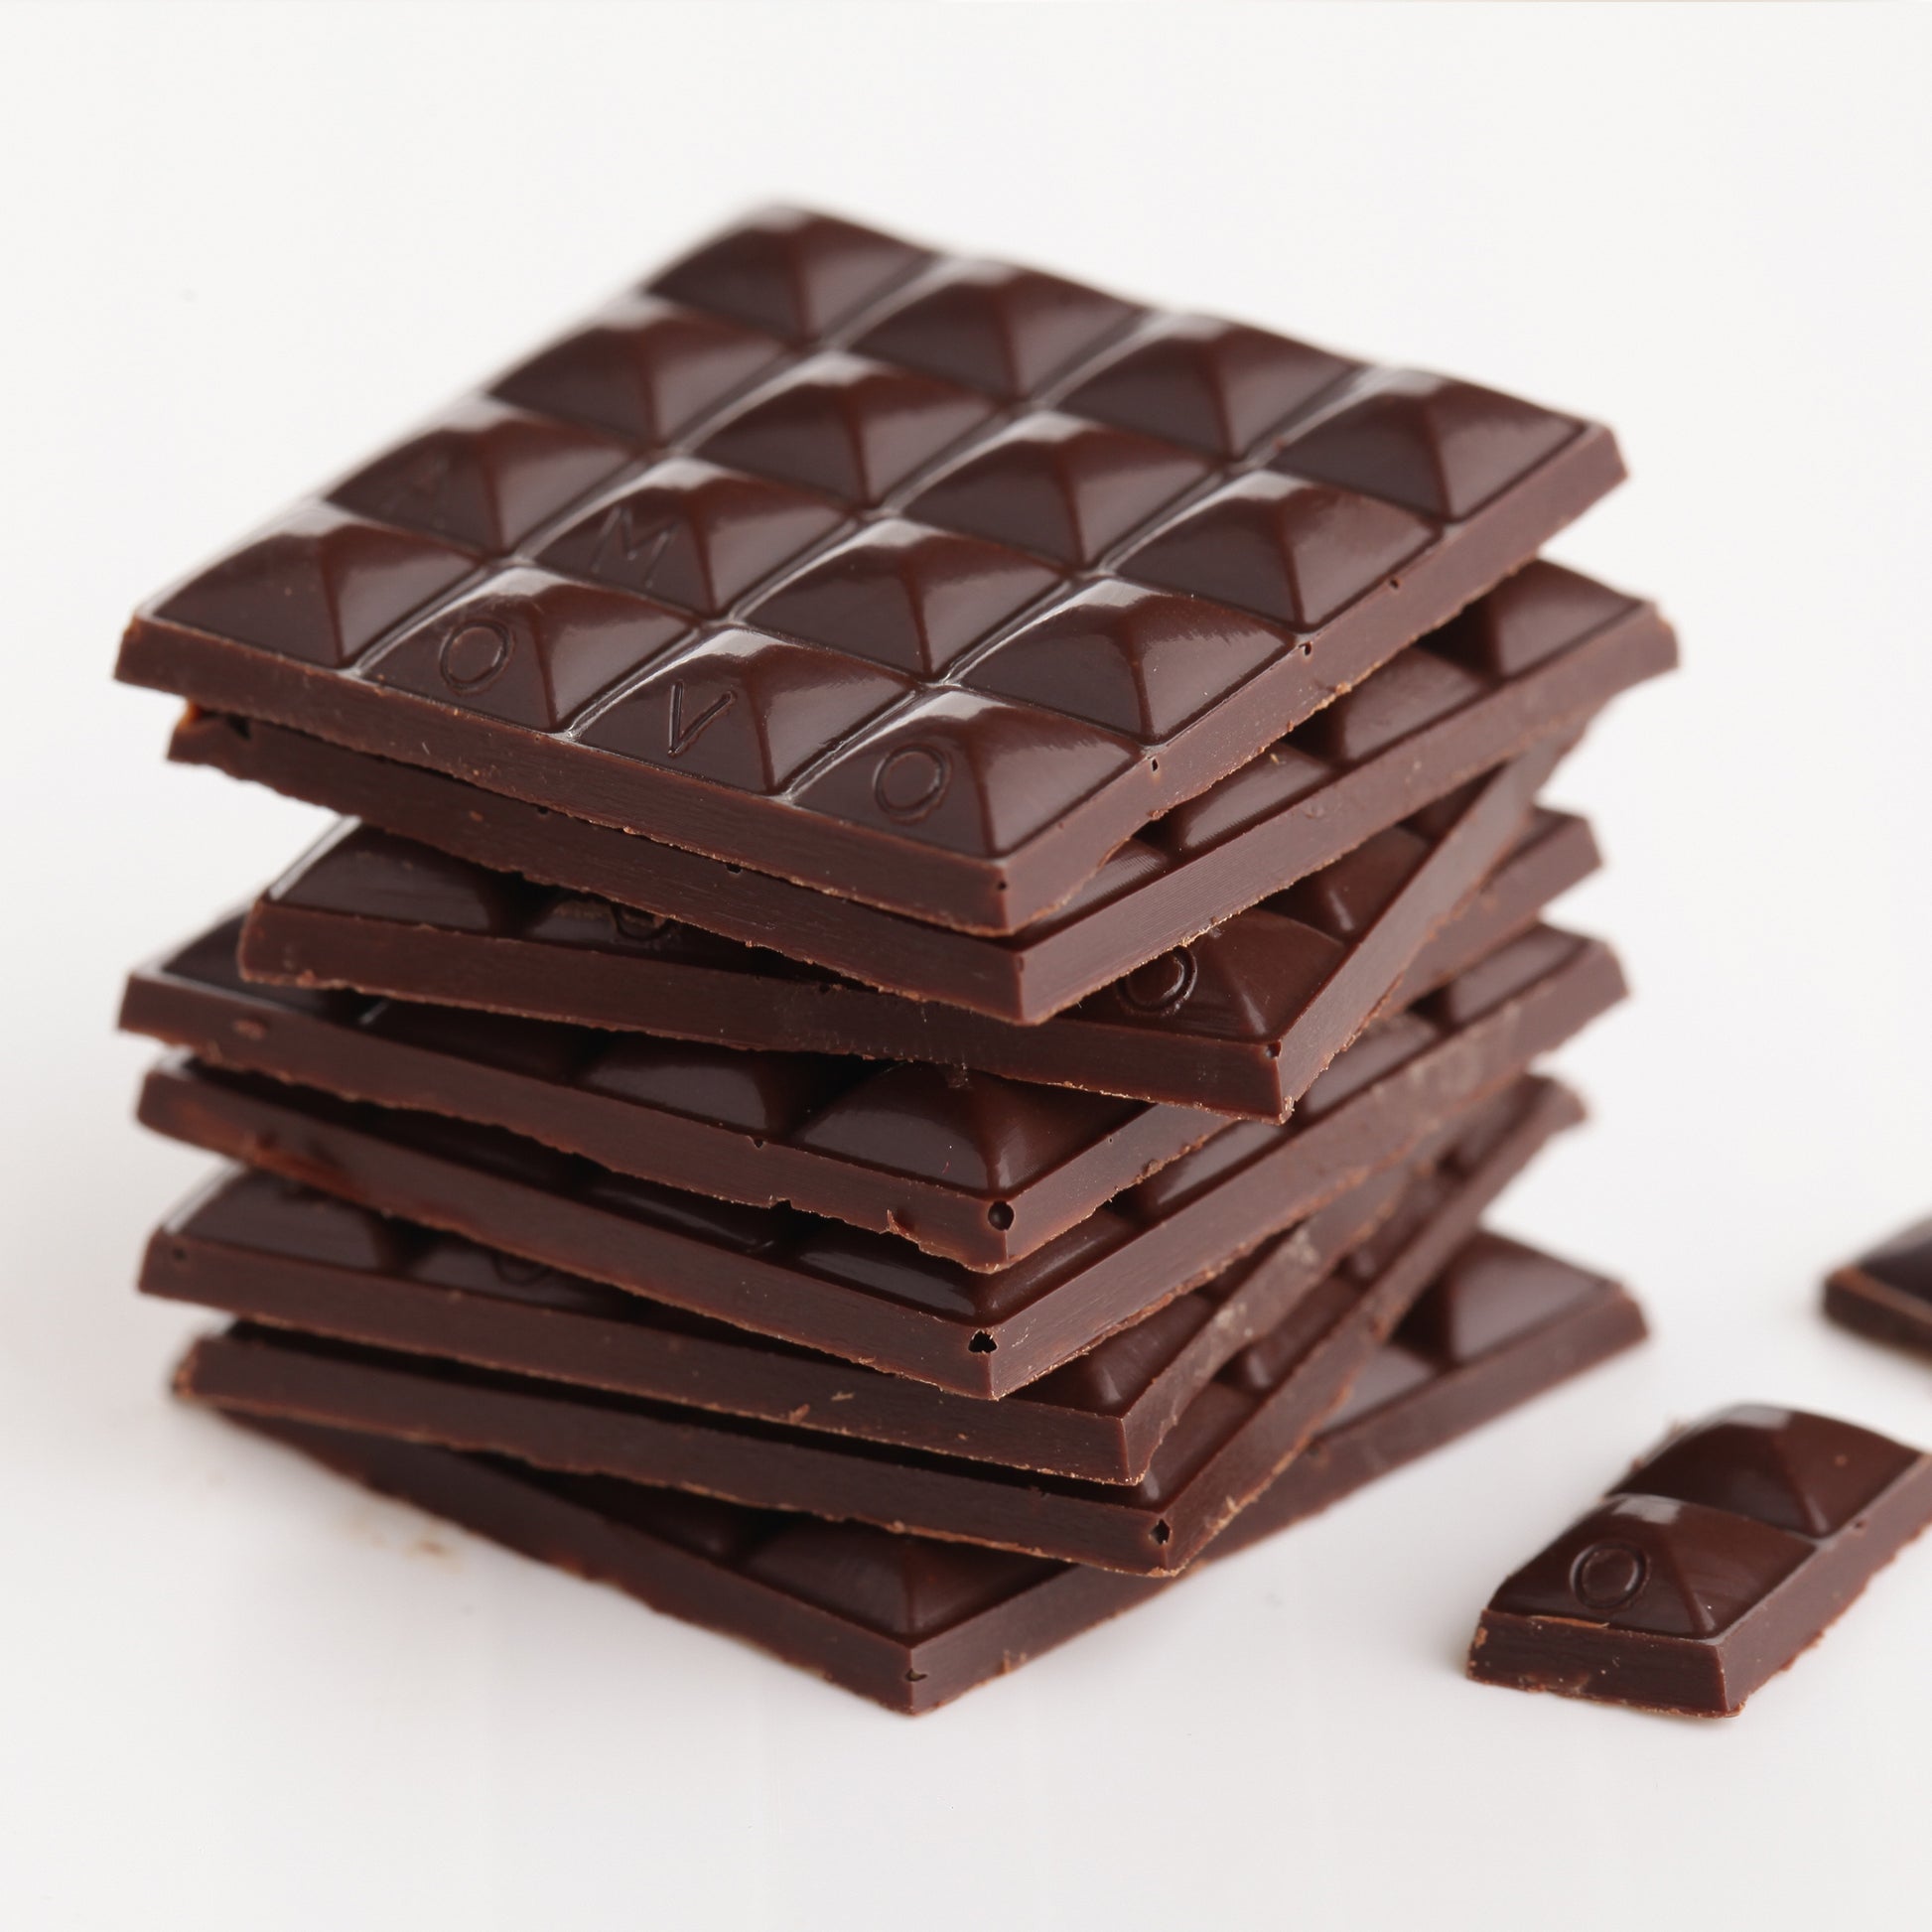 A photo of dark chocolate